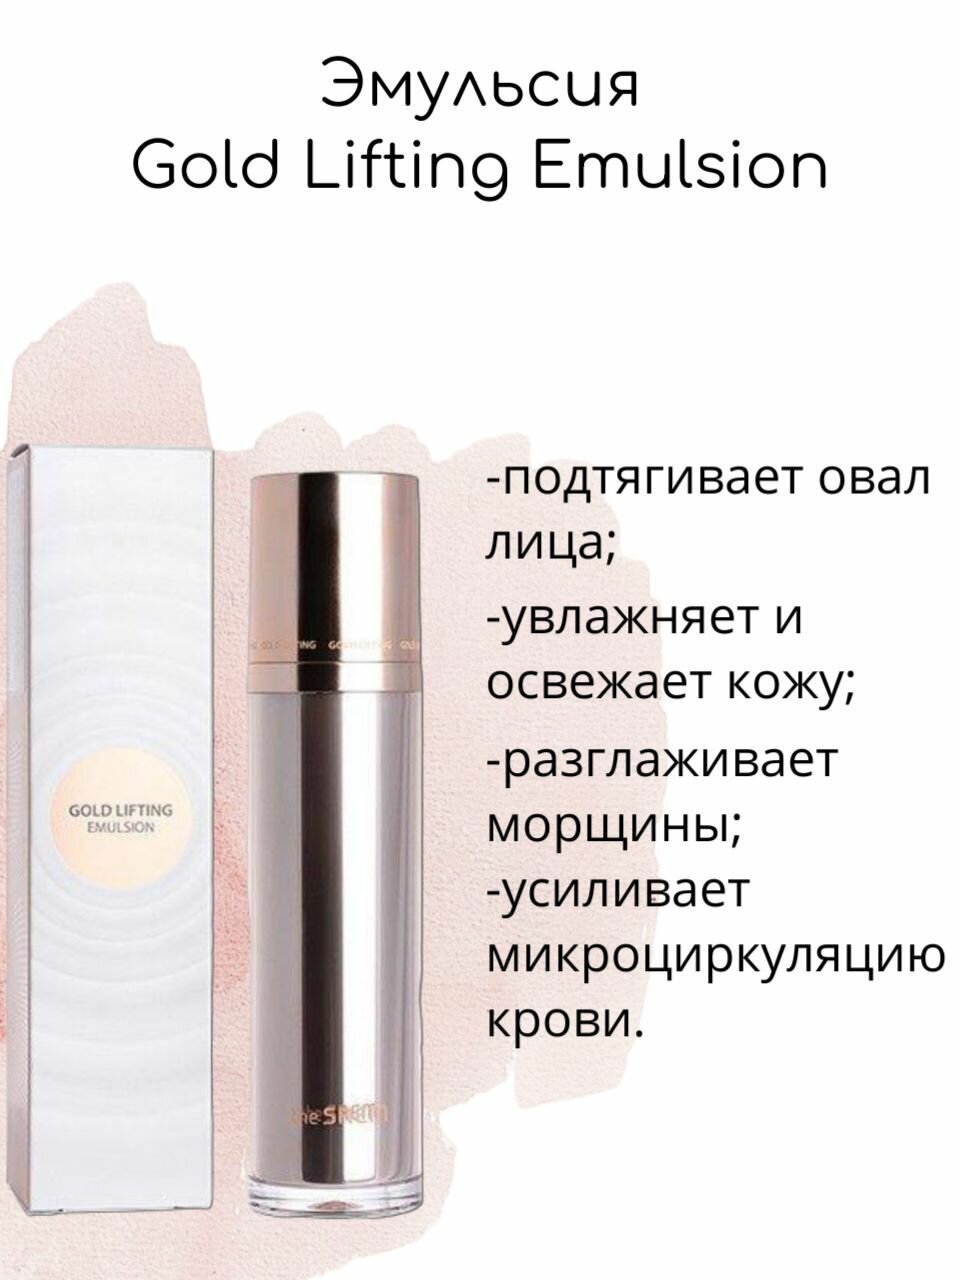 THE SAEM Эмульсия Gold Lifting Emulsion, 125мл